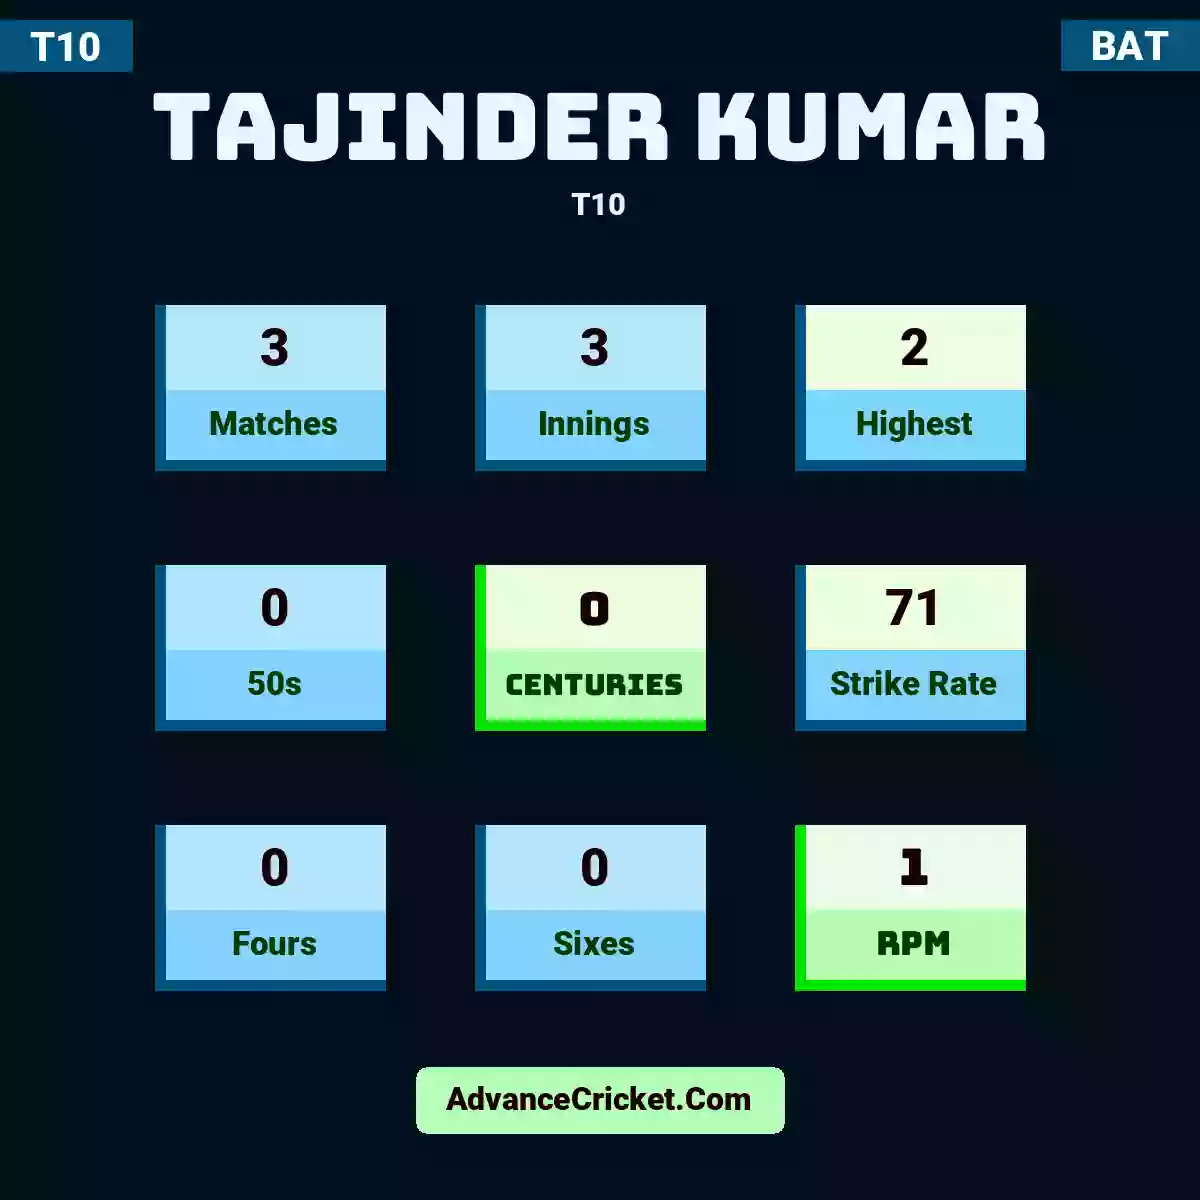 Tajinder Kumar T10 , Tajinder Kumar played 3 matches, scored 2 runs as highest, 0 half-centuries, and 0 centuries, with a strike rate of 71. T.Kumar hit 0 fours and 0 sixes, with an RPM of 1.